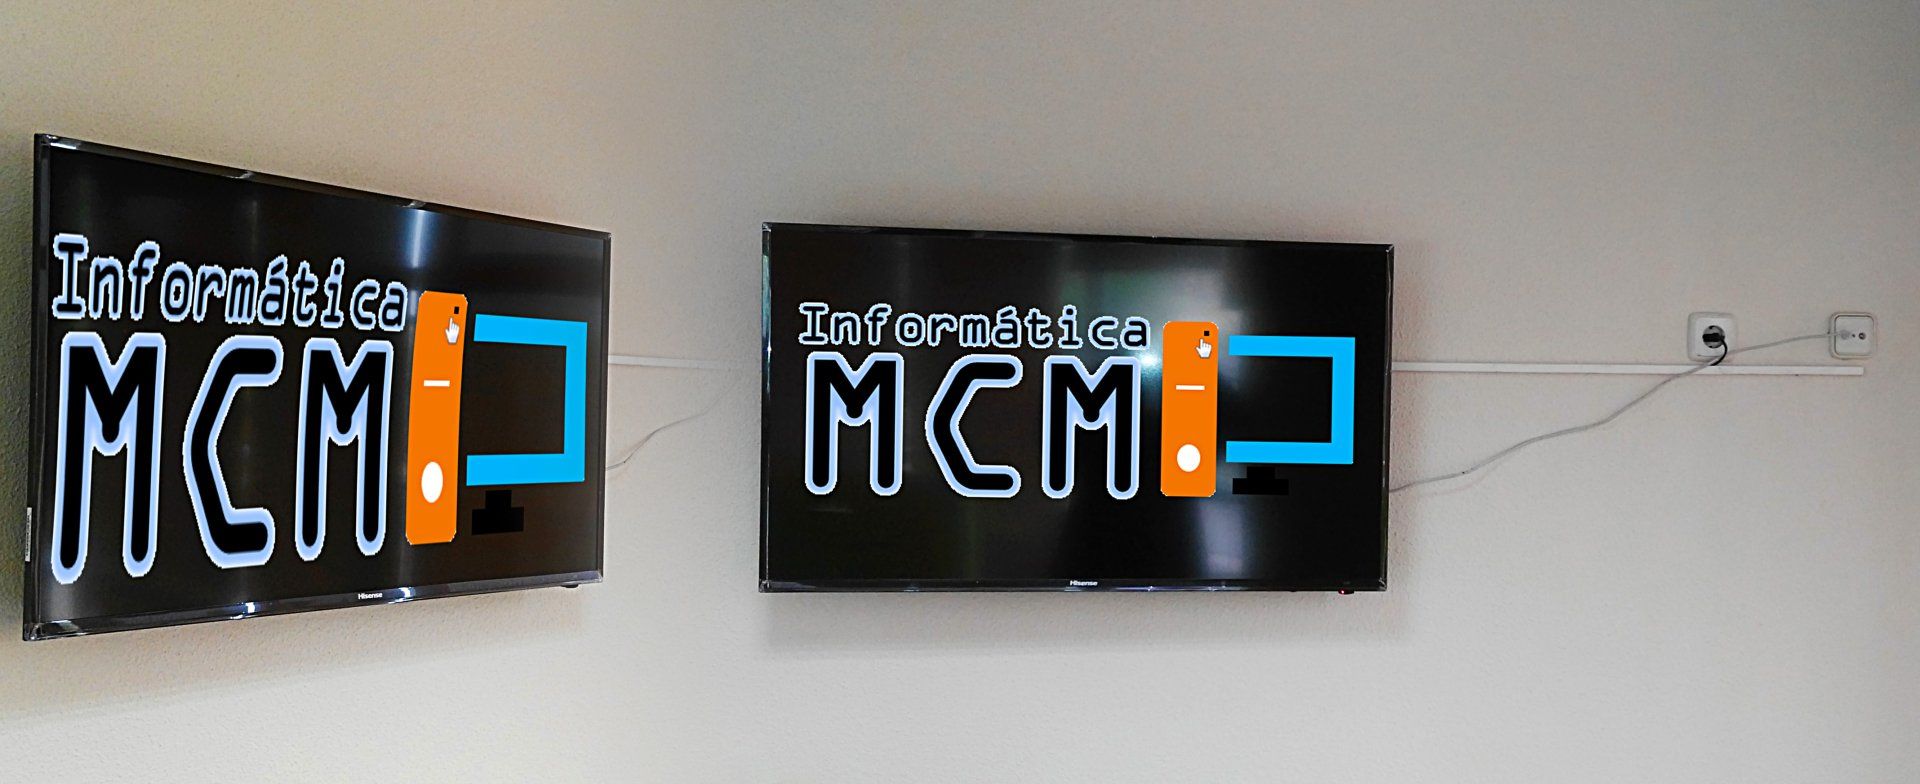 InstalacionTv Aulas Informaticas McM Informatica Simancas Madrid